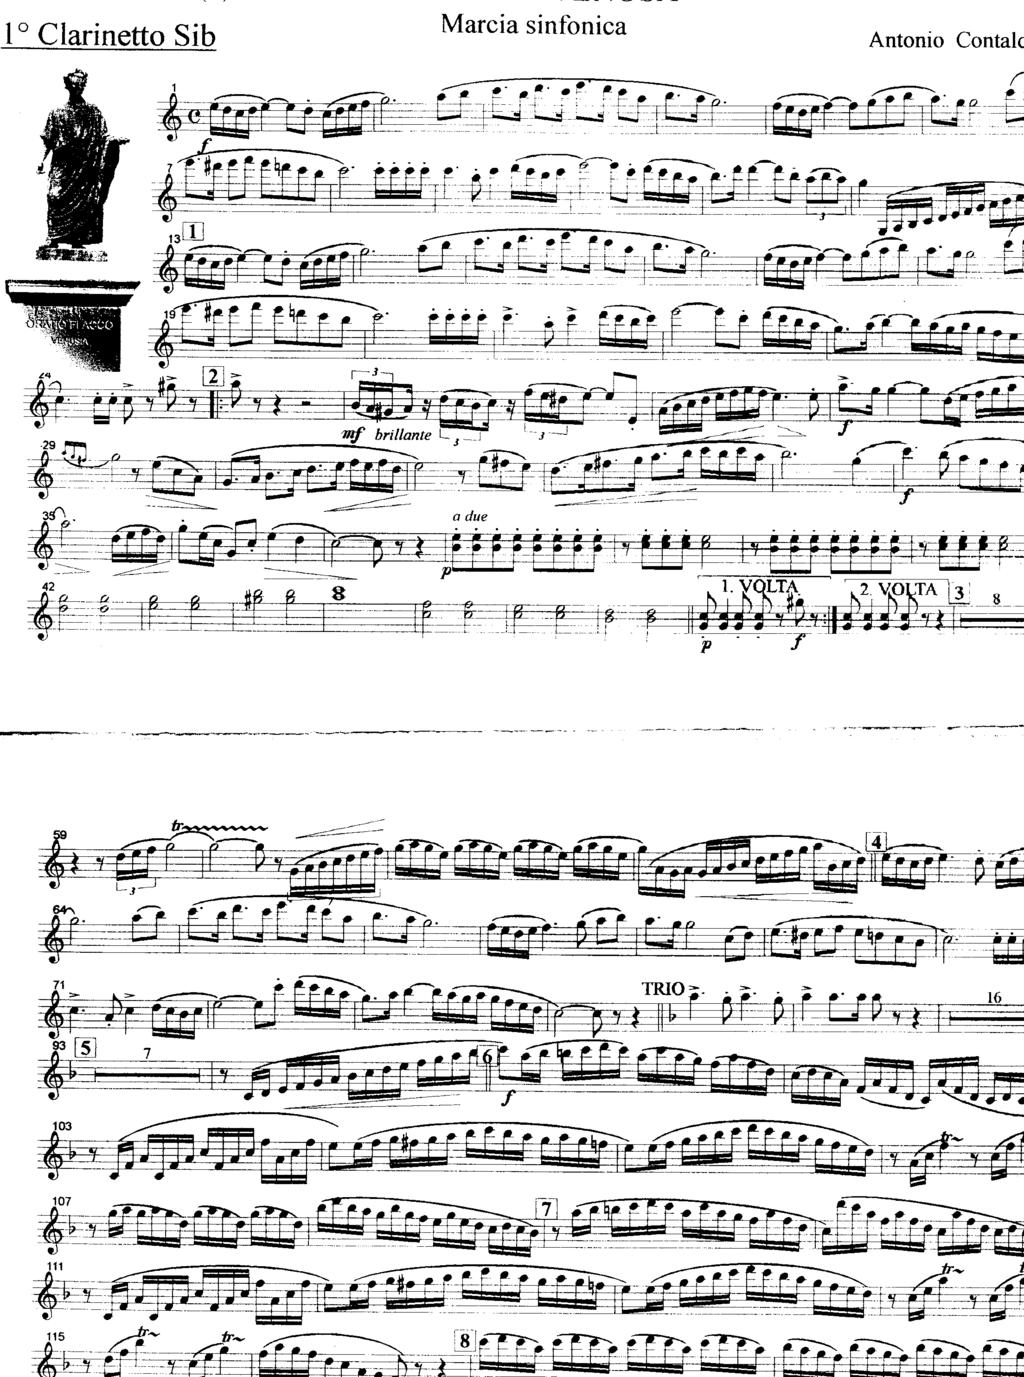 Marcia sinfonica 1 Clarinetto Sib Antonio Contale ÉE=iyfei3=g?